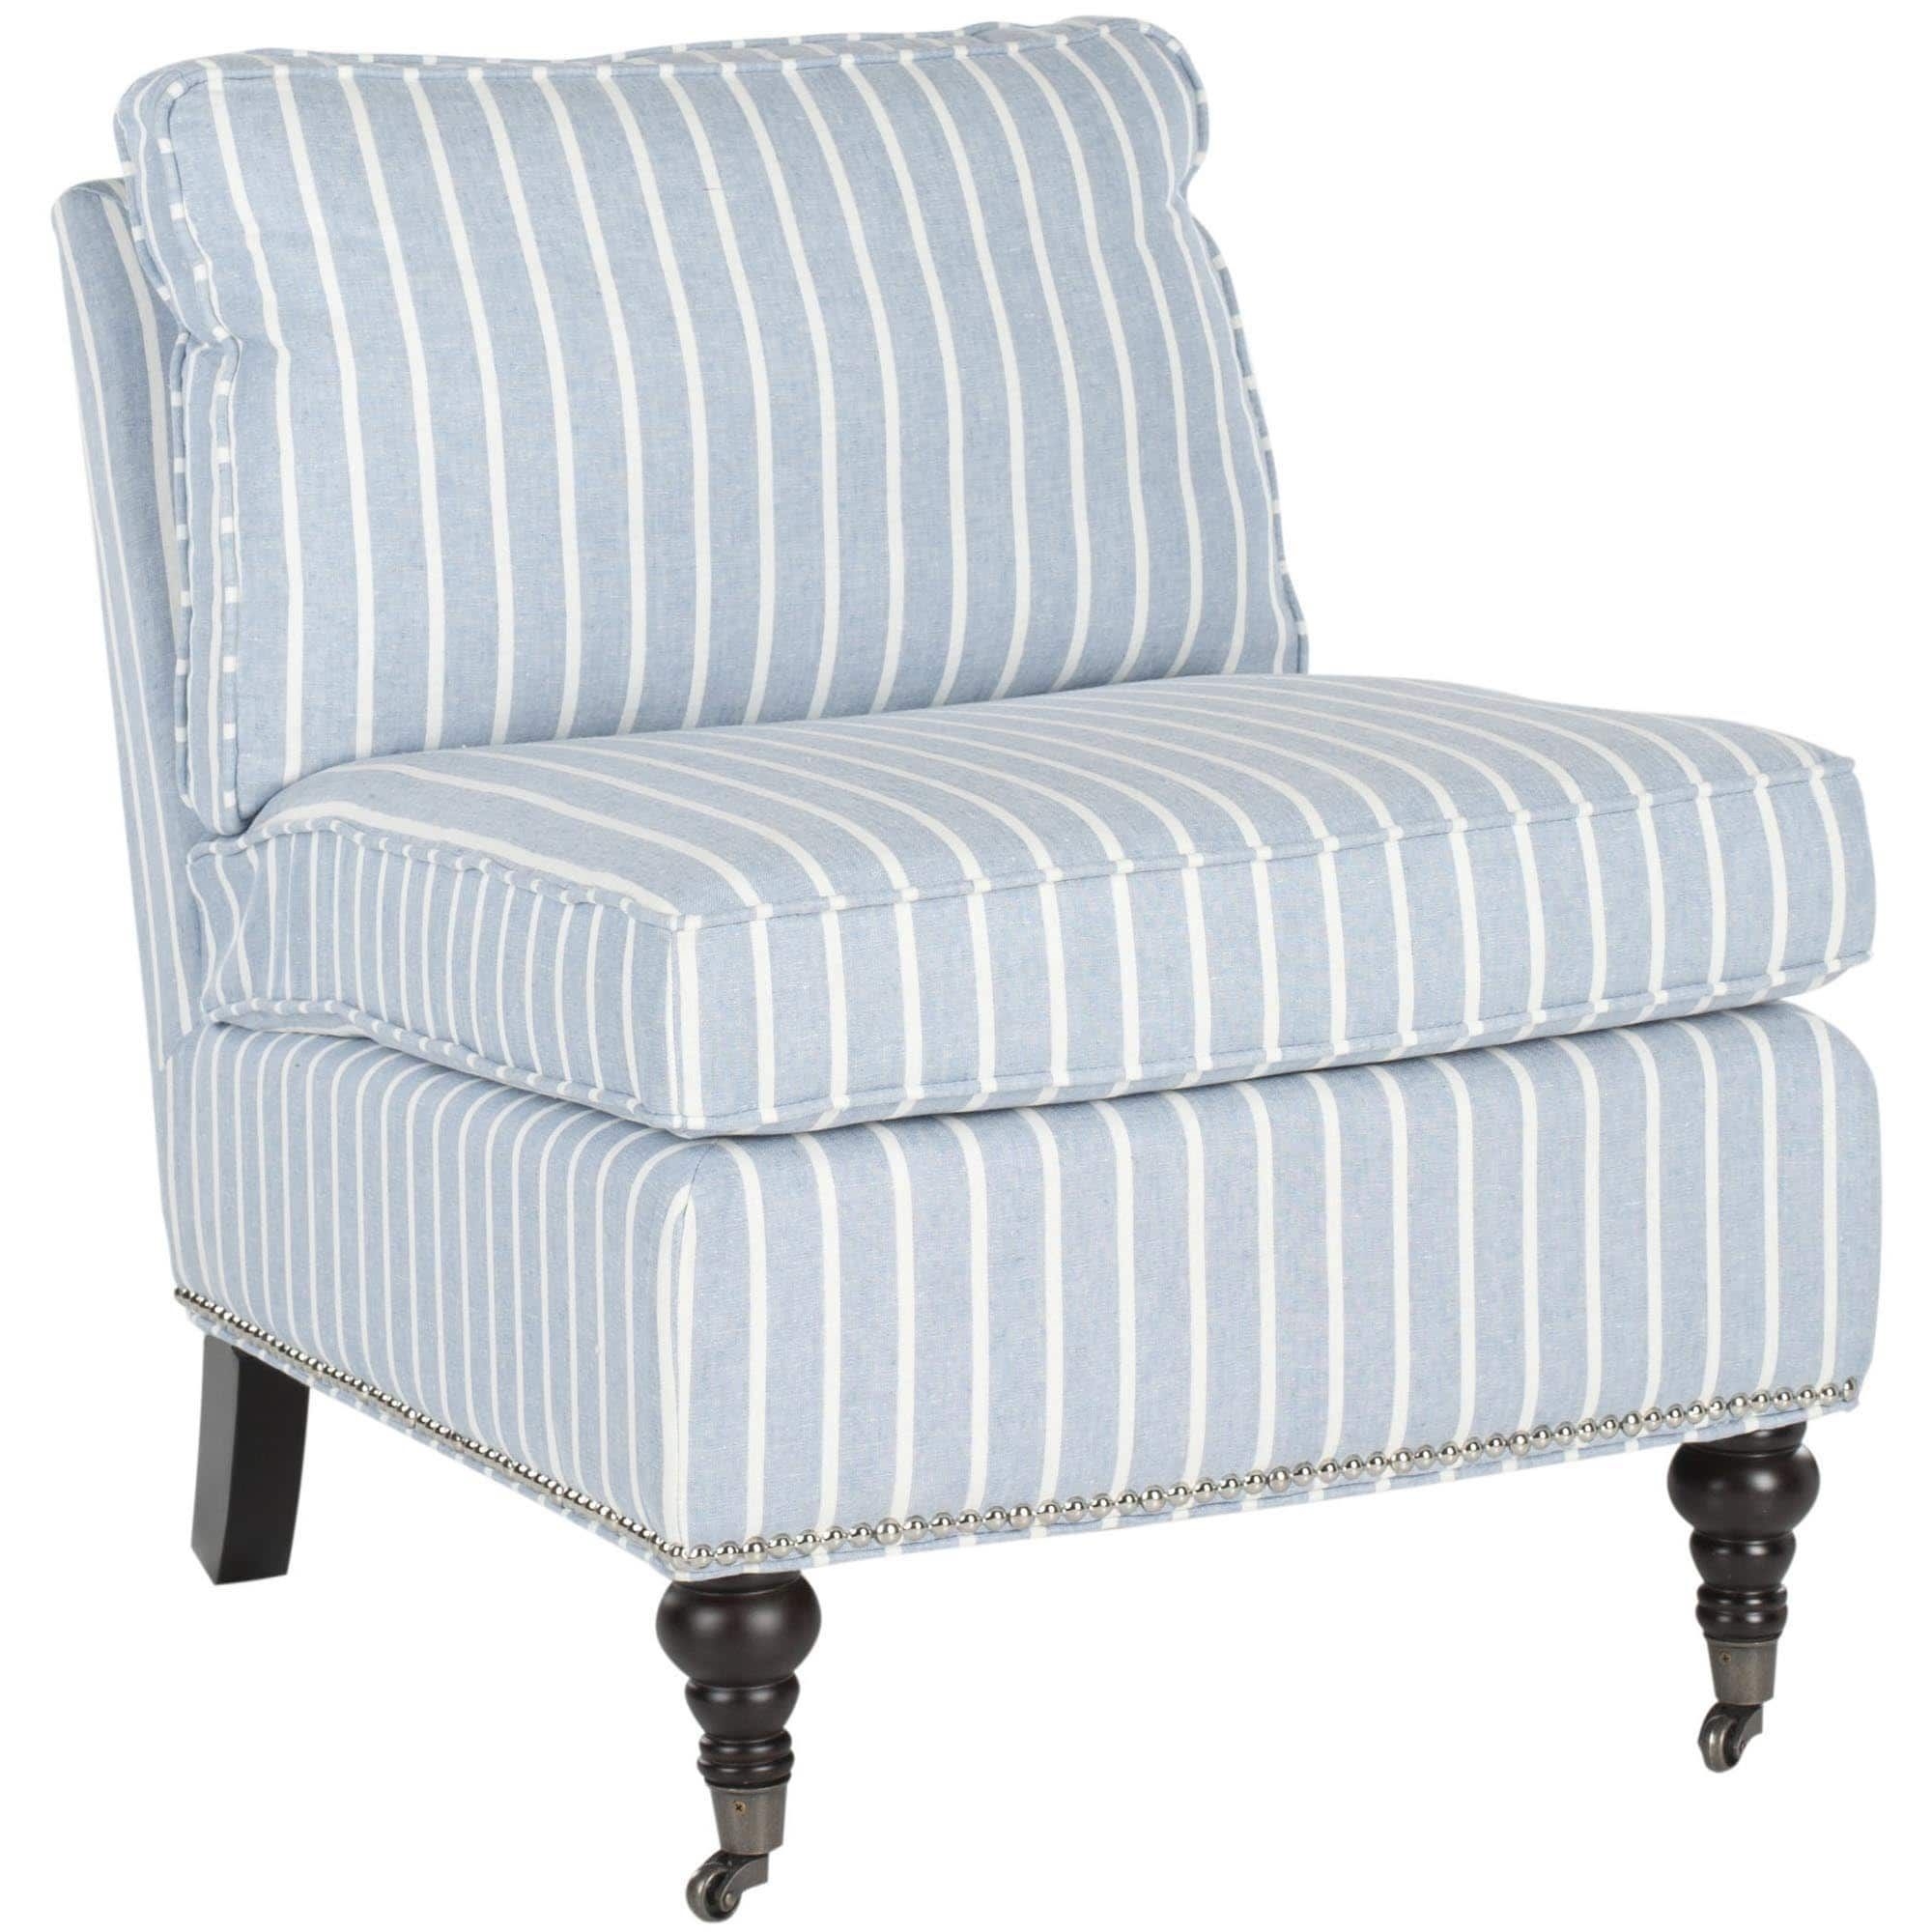 Safavieh Mercer Collection Randy Slipper Chair, Blue